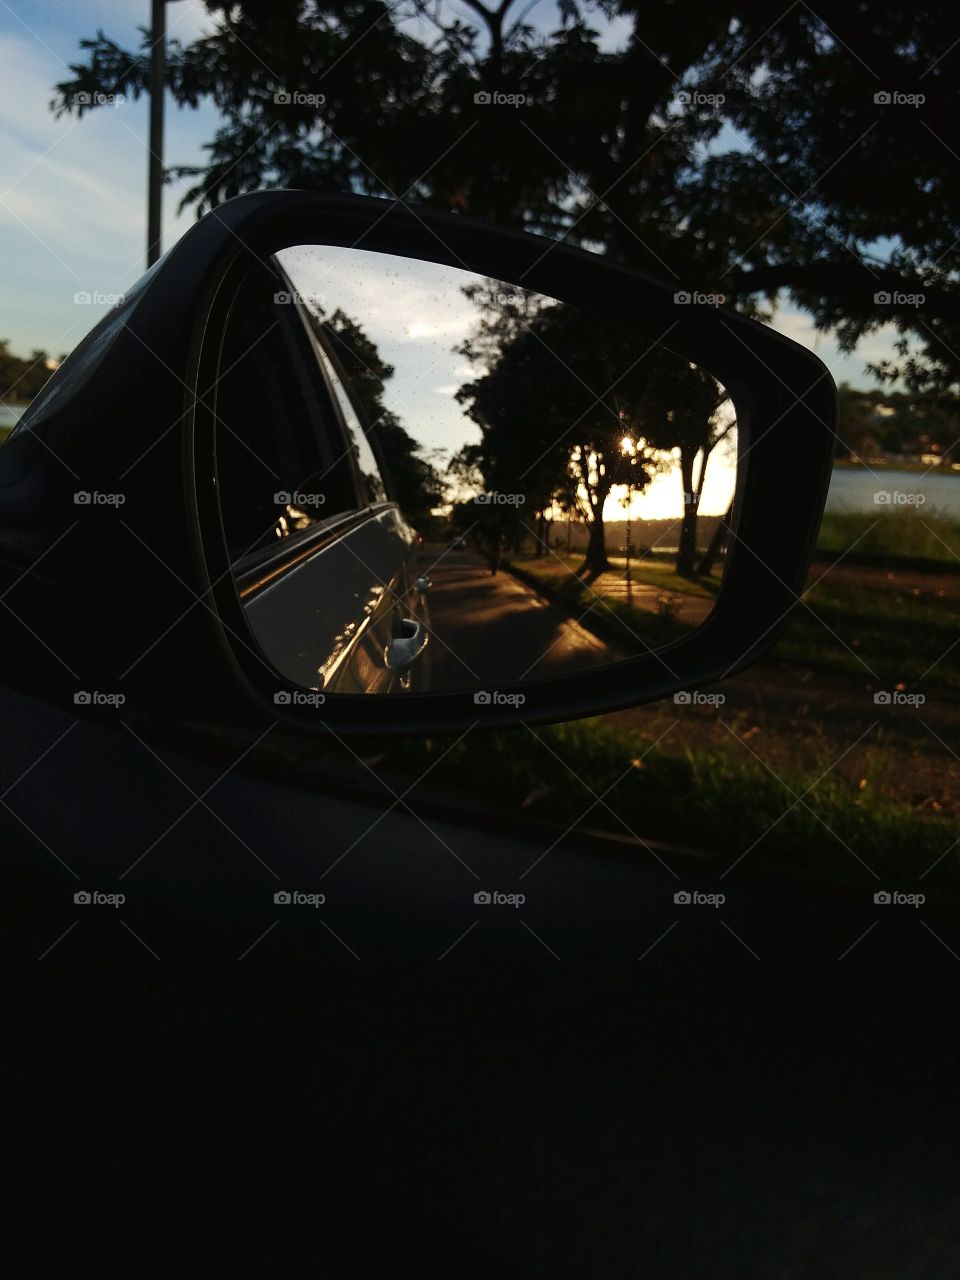 Mirror View of a Car